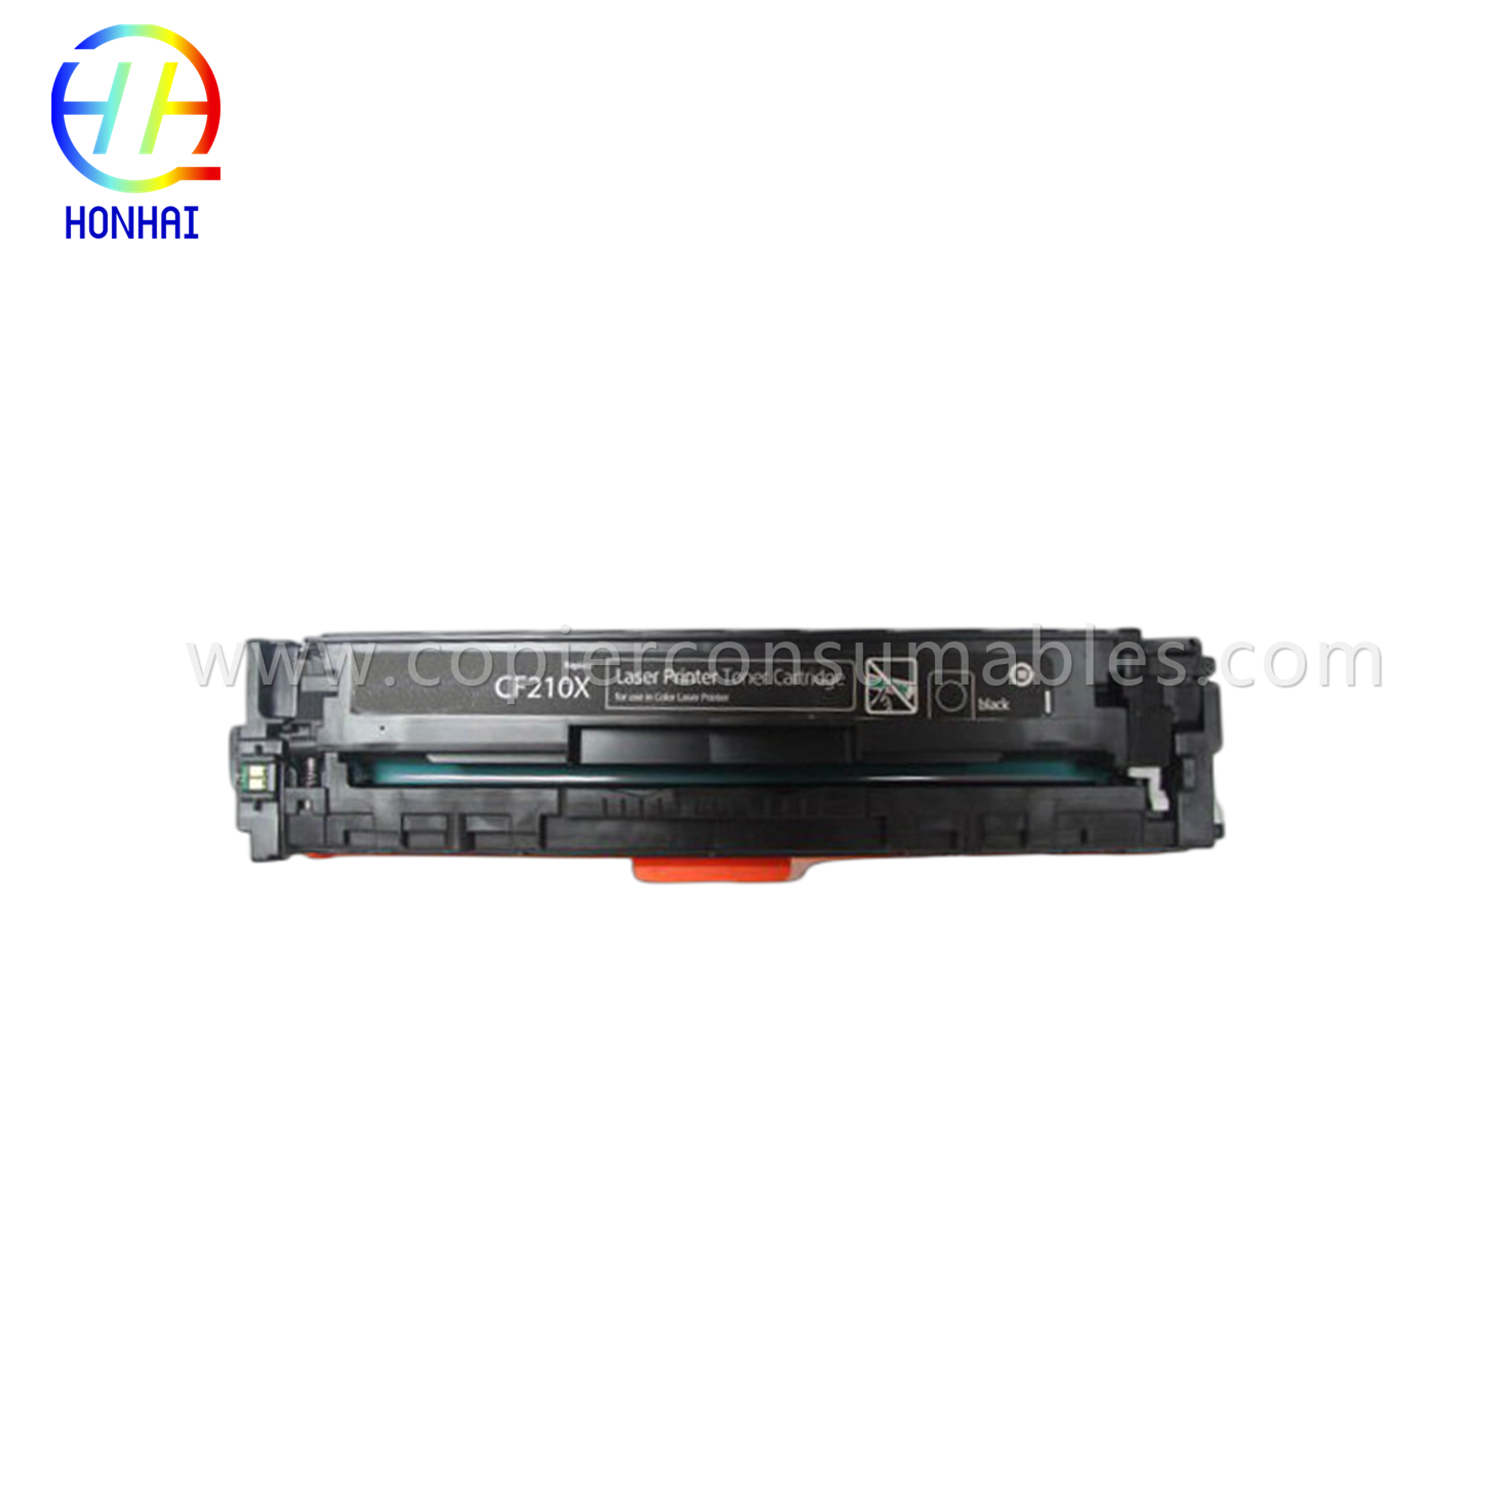 Toner Cartridge for HP Color Laserjet PRO M452DN M452dw M452nw Mfp M377dw Mfp M477fdn Mfp M477fdw Mfp M477fnw (CF410A CF413A) (1)